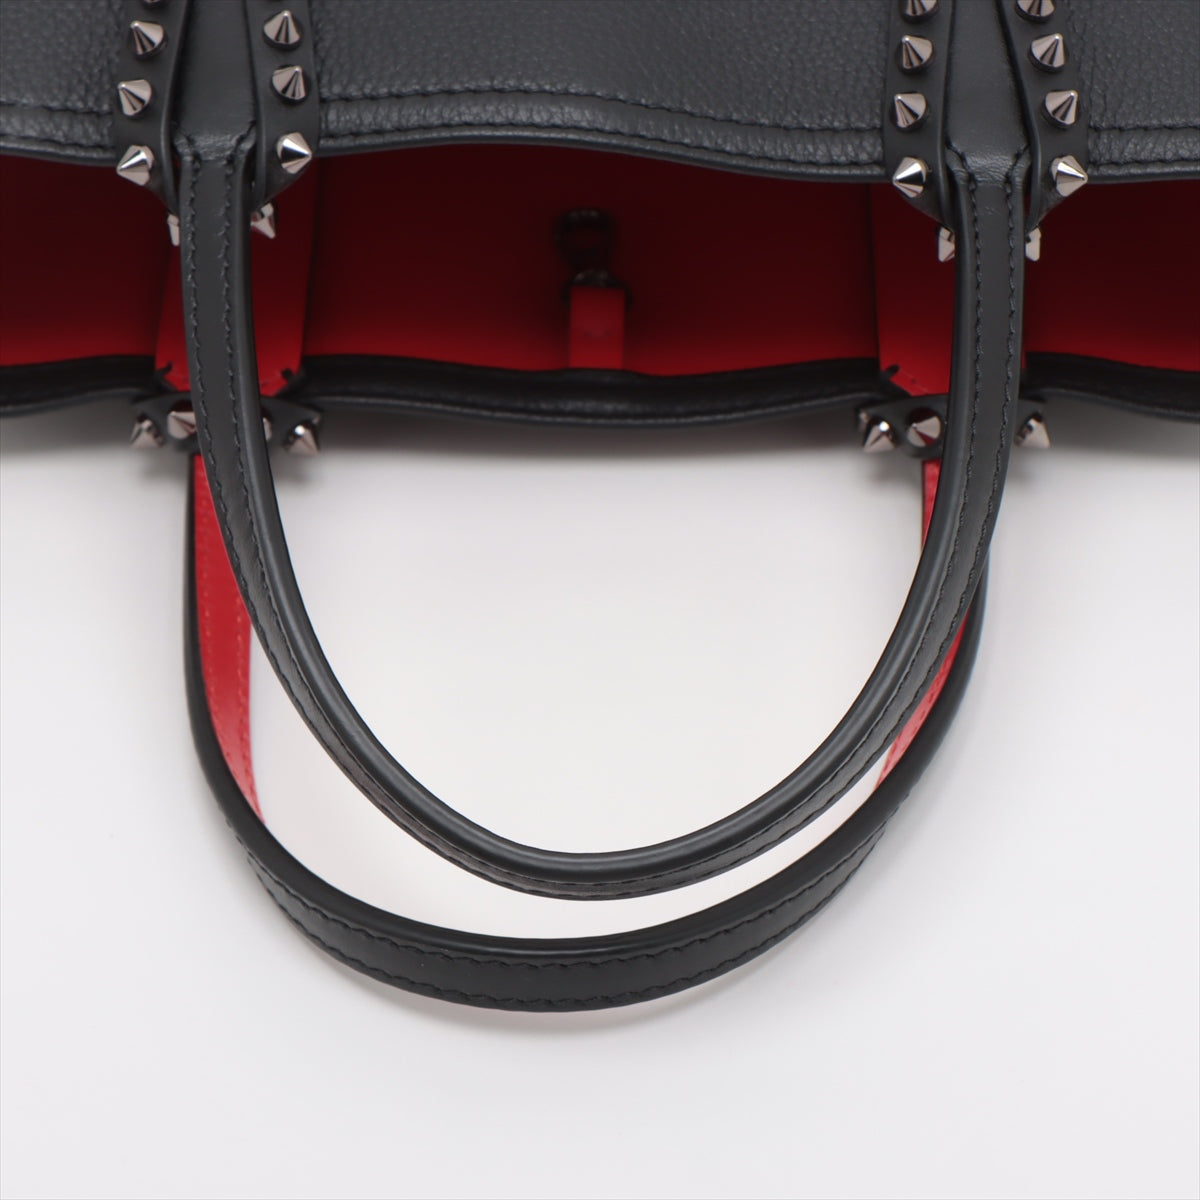 Christian Louboutin Cabata Mini leather x studs 2 Way Handbag Black x red